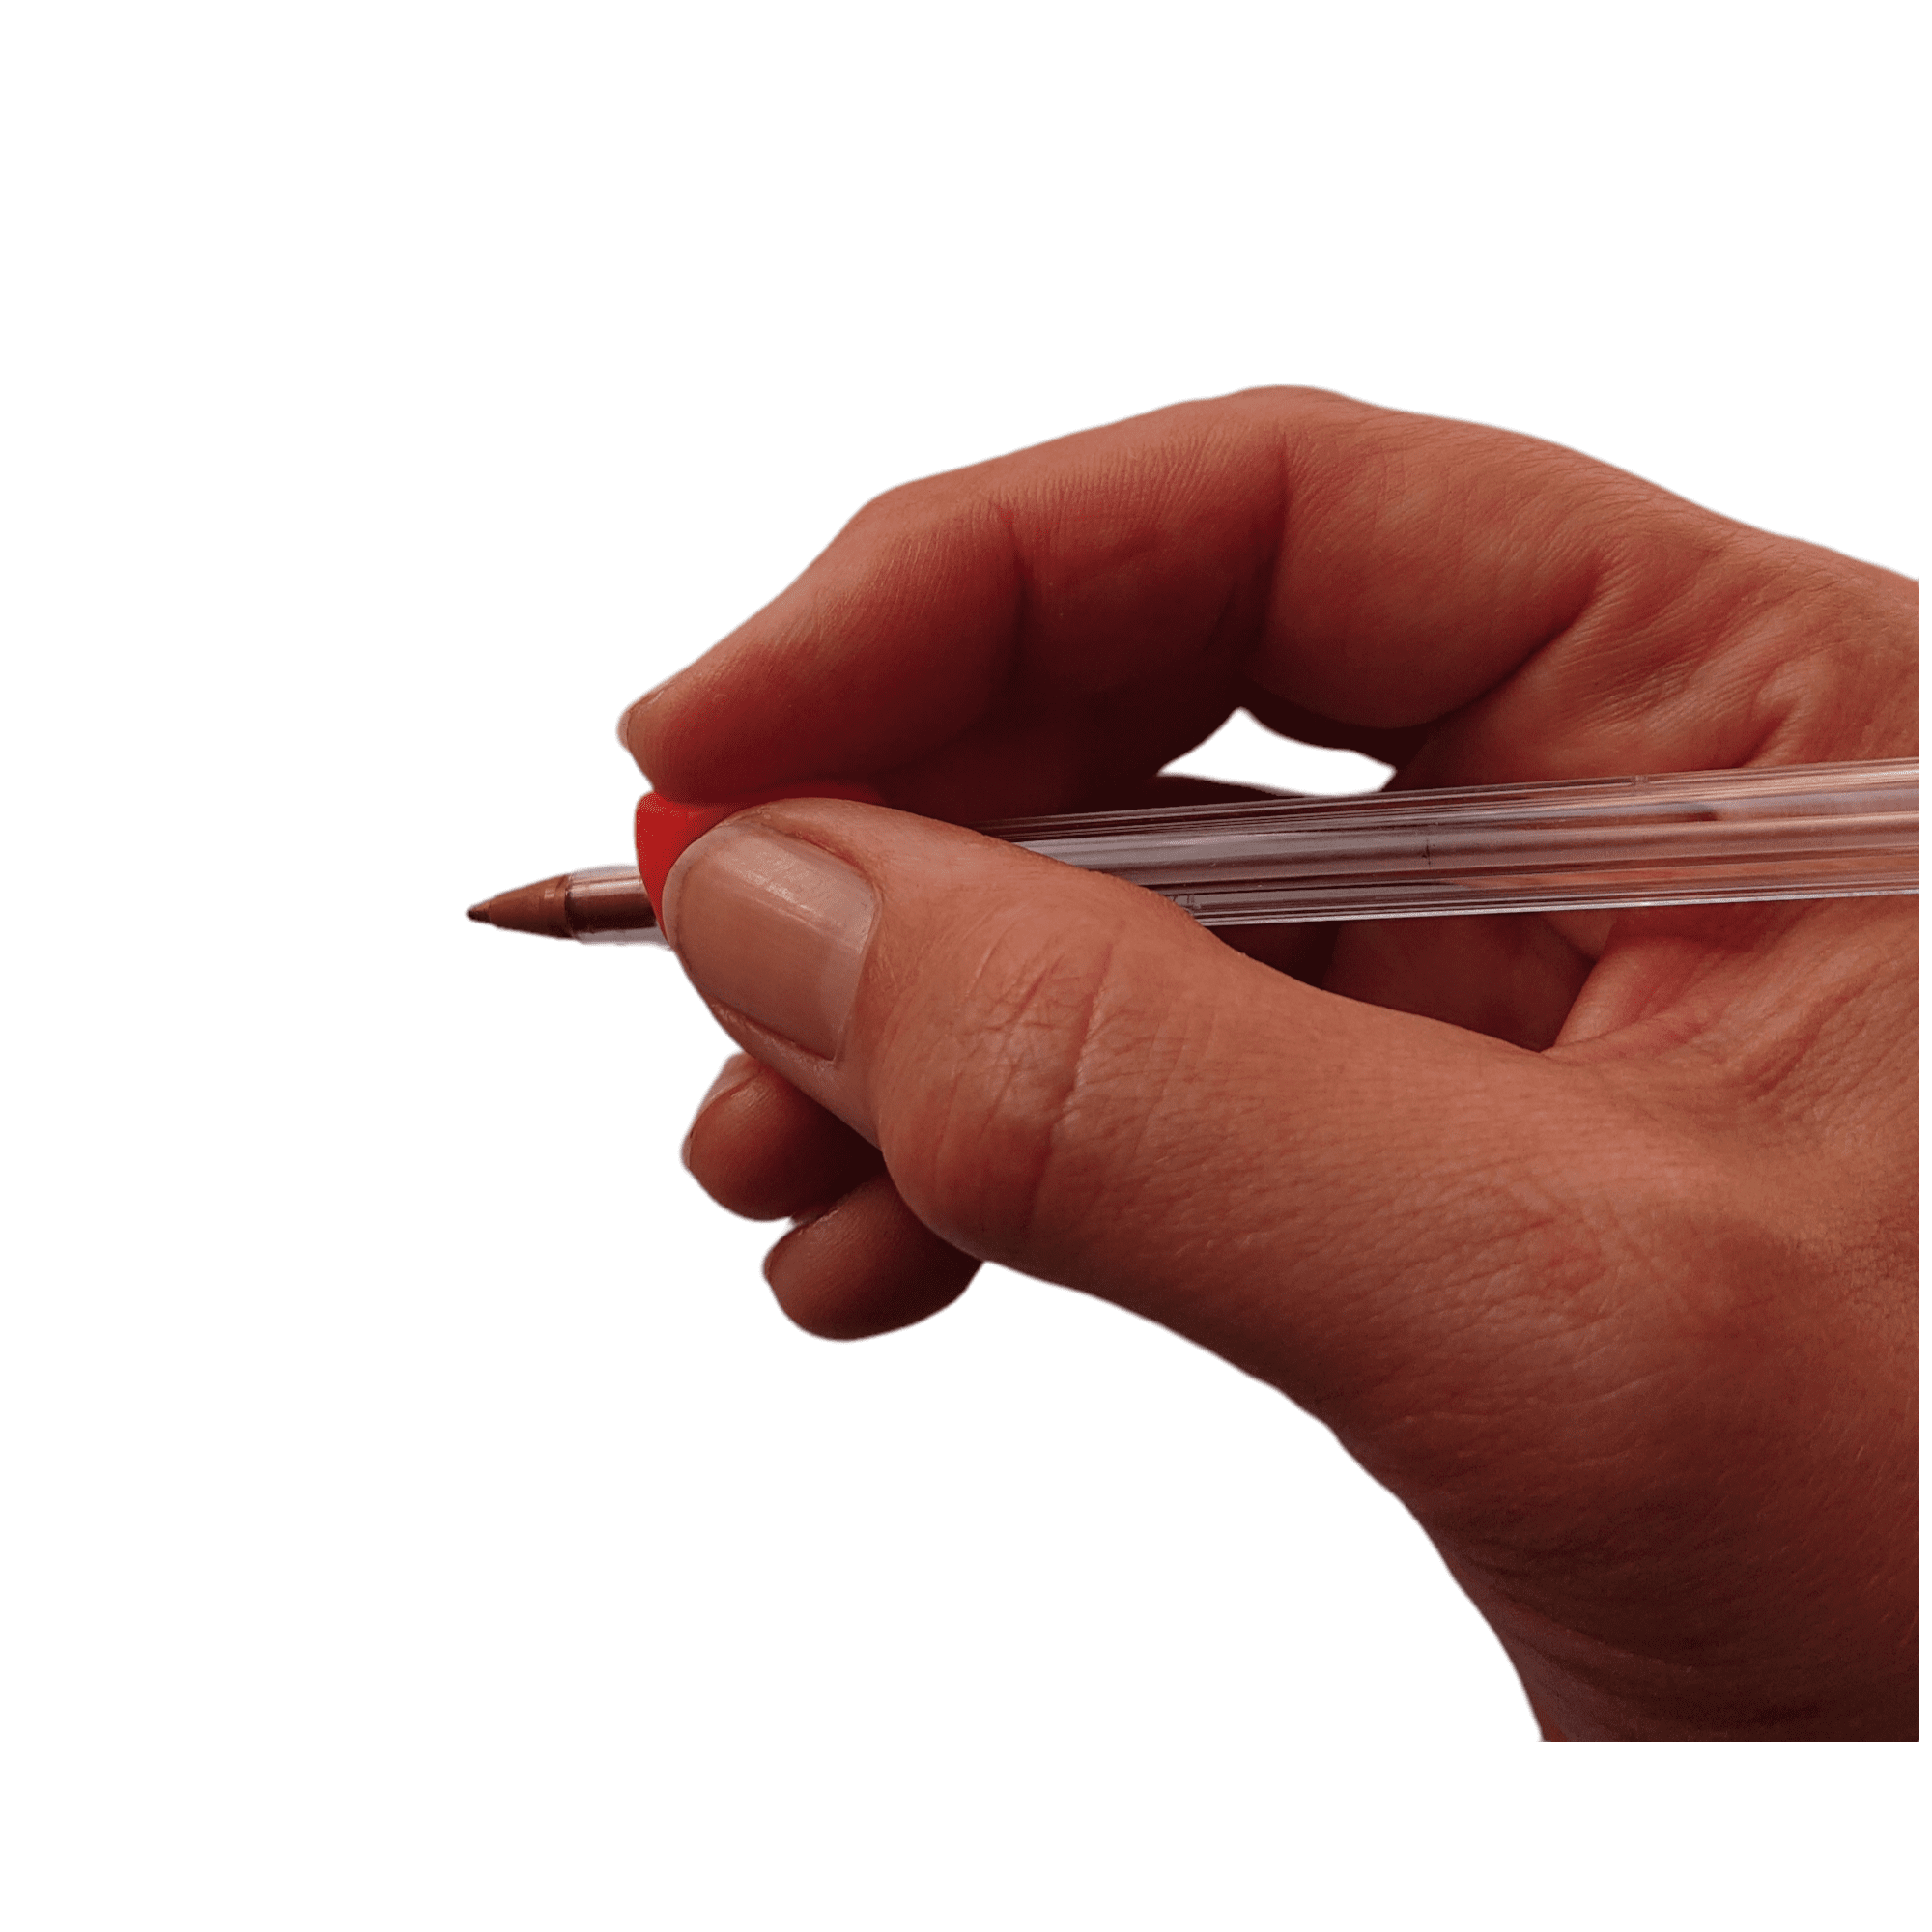 a grippies pencil grip on a normal biro pen